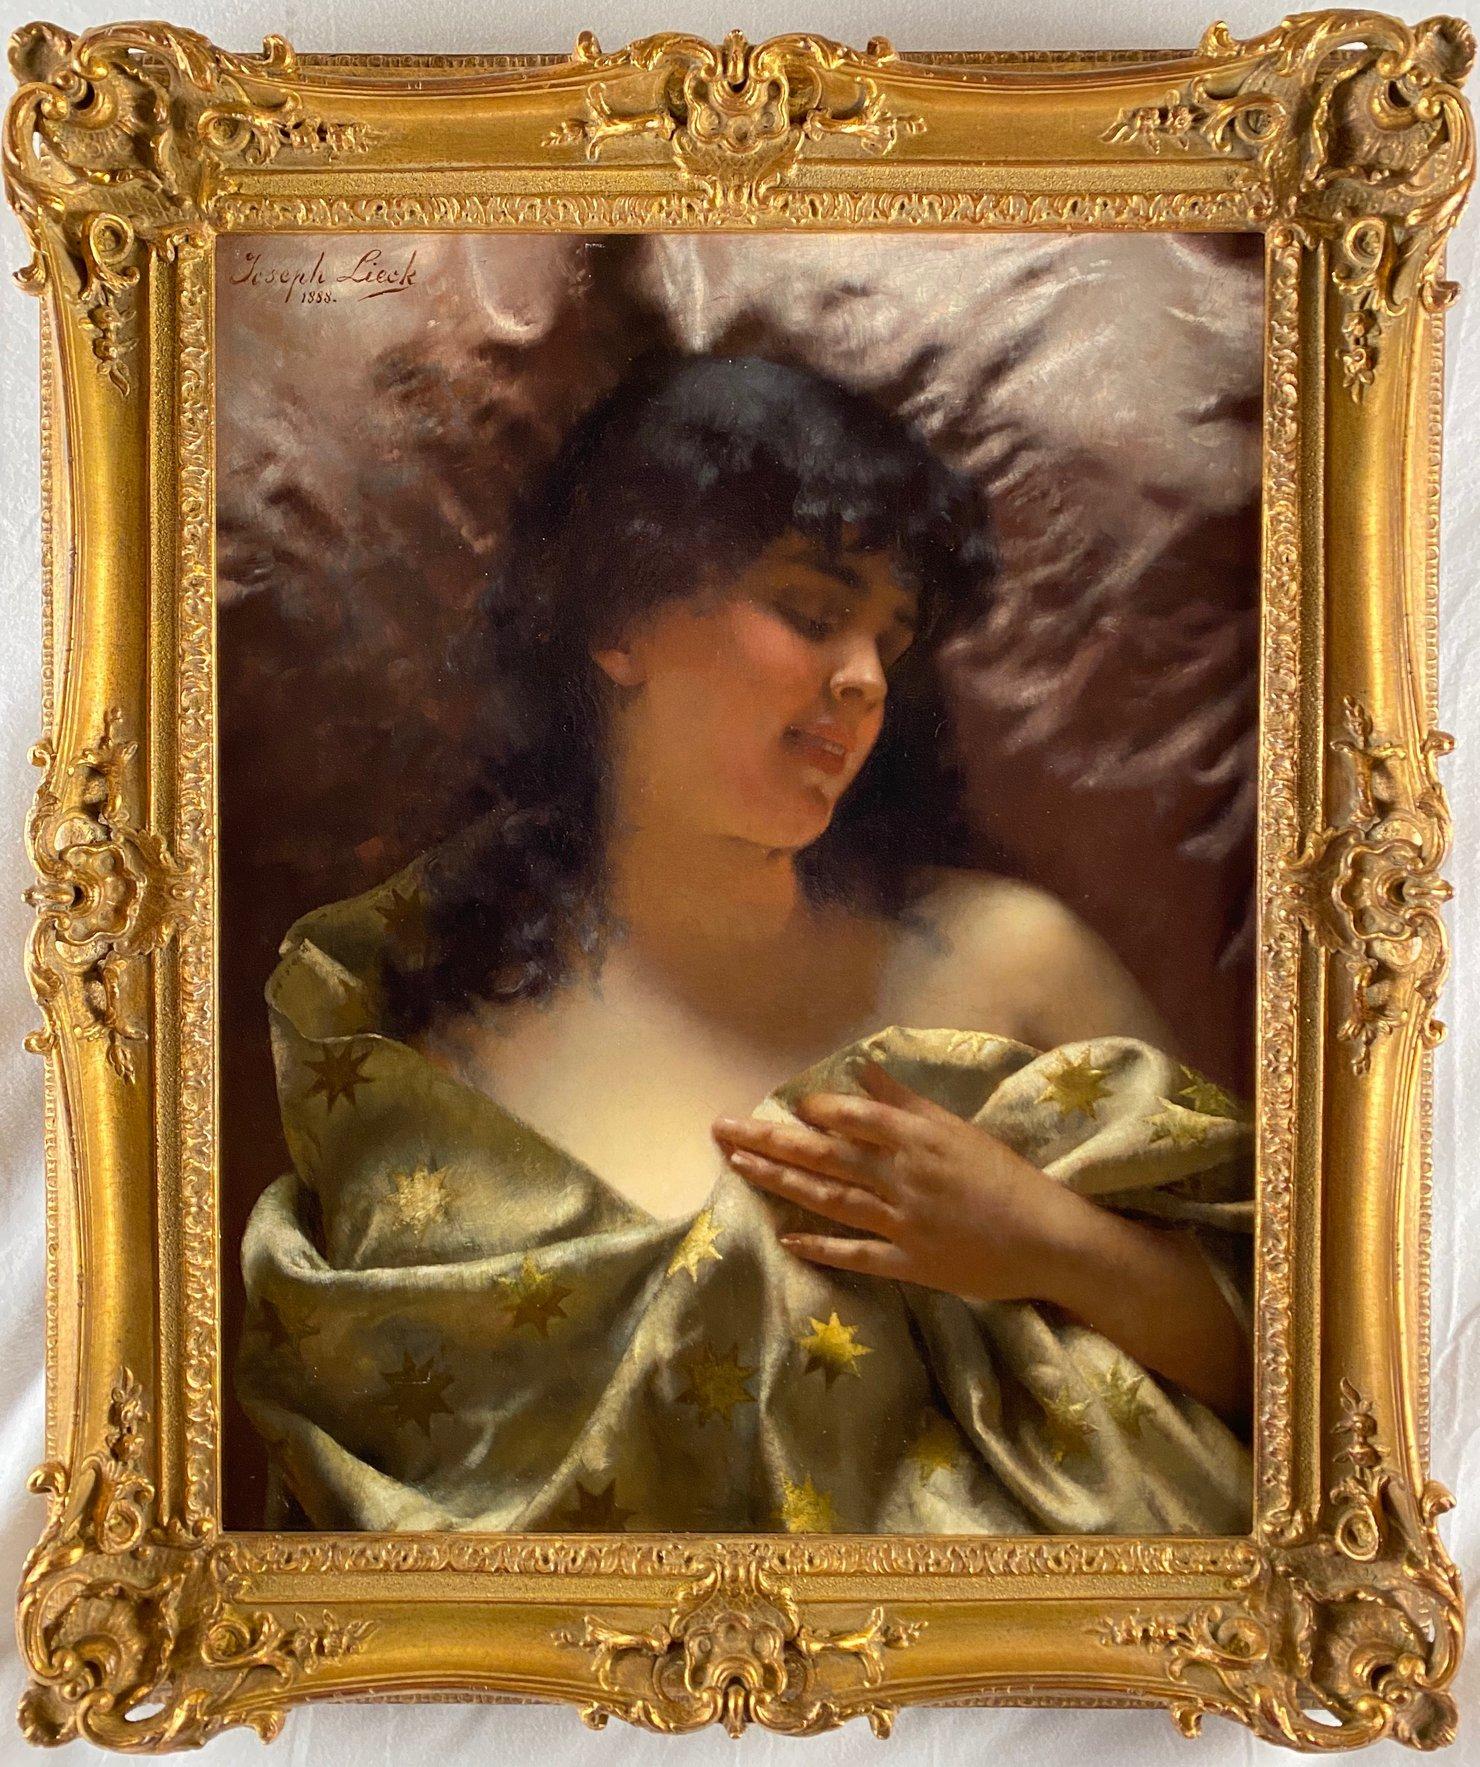 SLEEPING BEAUTY (1888) BY JOSEPH LIECK - Painting by Joseph Lieck